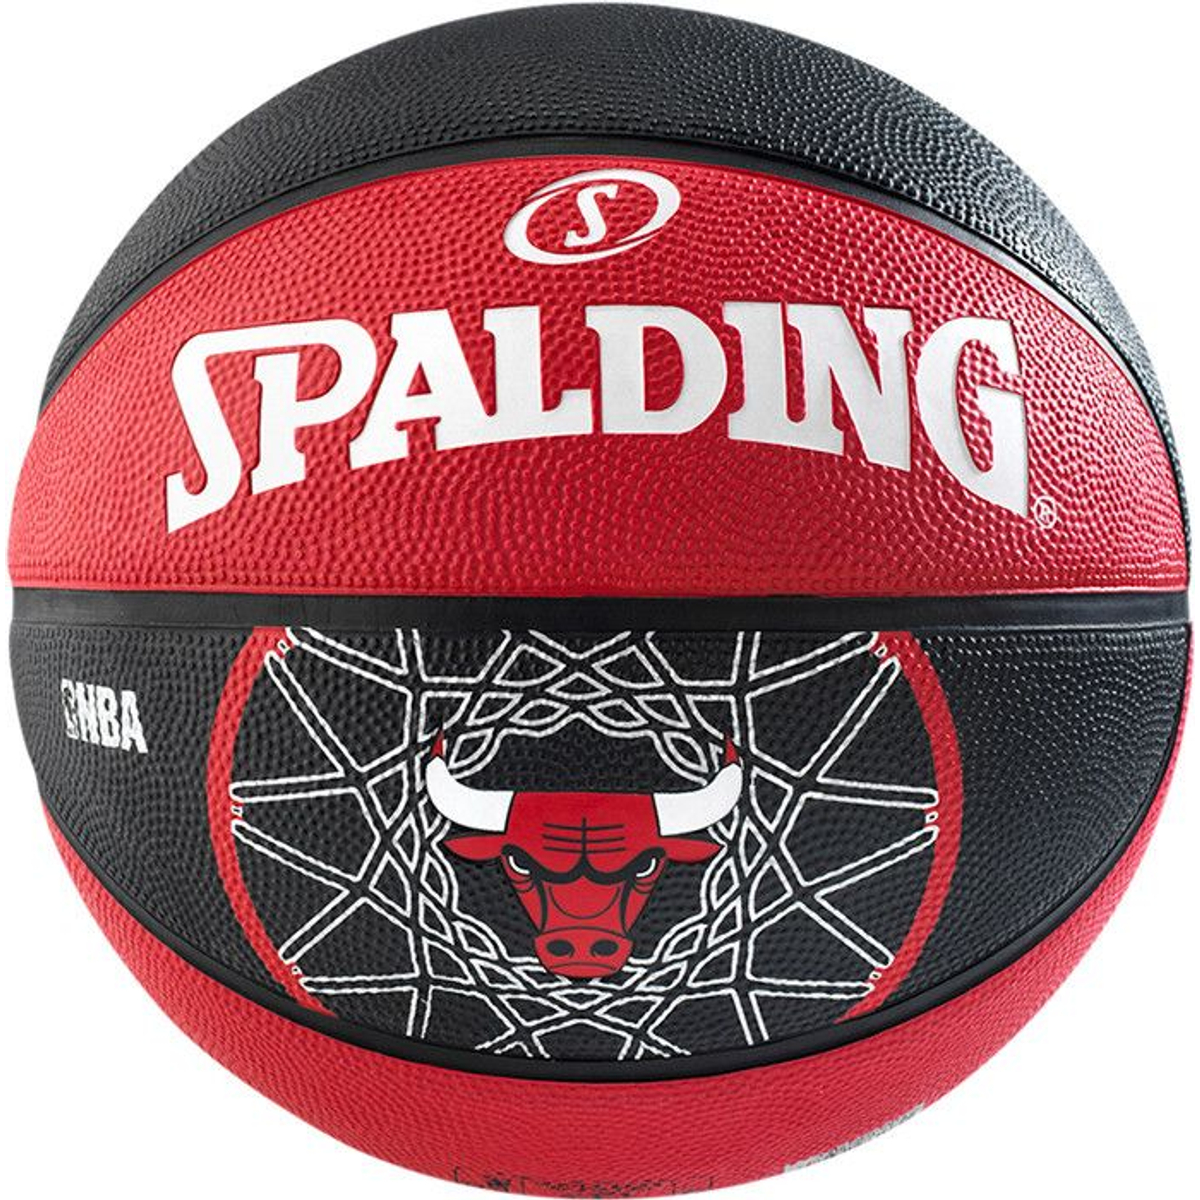 Spalding Chicago Bulls Basketbal Teambal